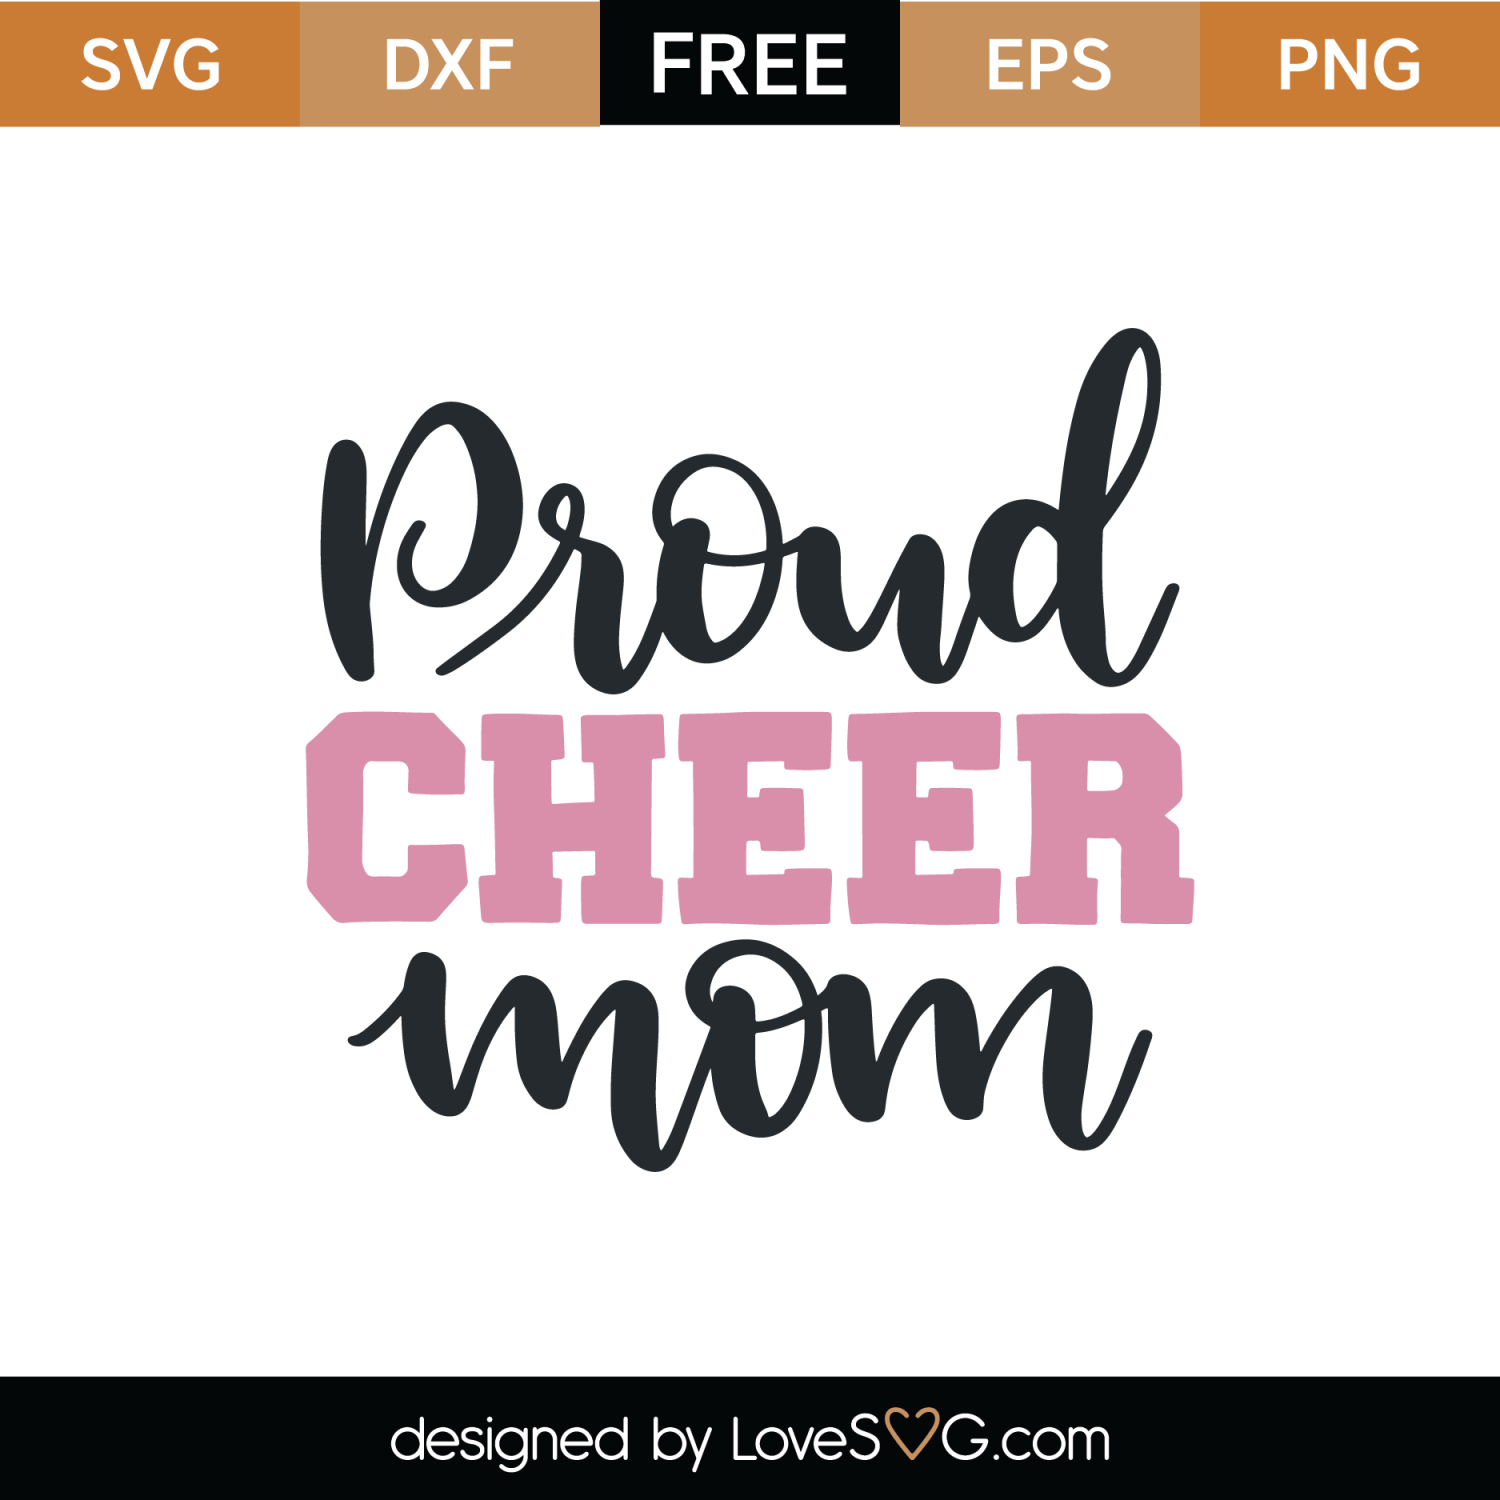 Download Free Proud Cheer Mom SVG Cut File | Lovesvg.com